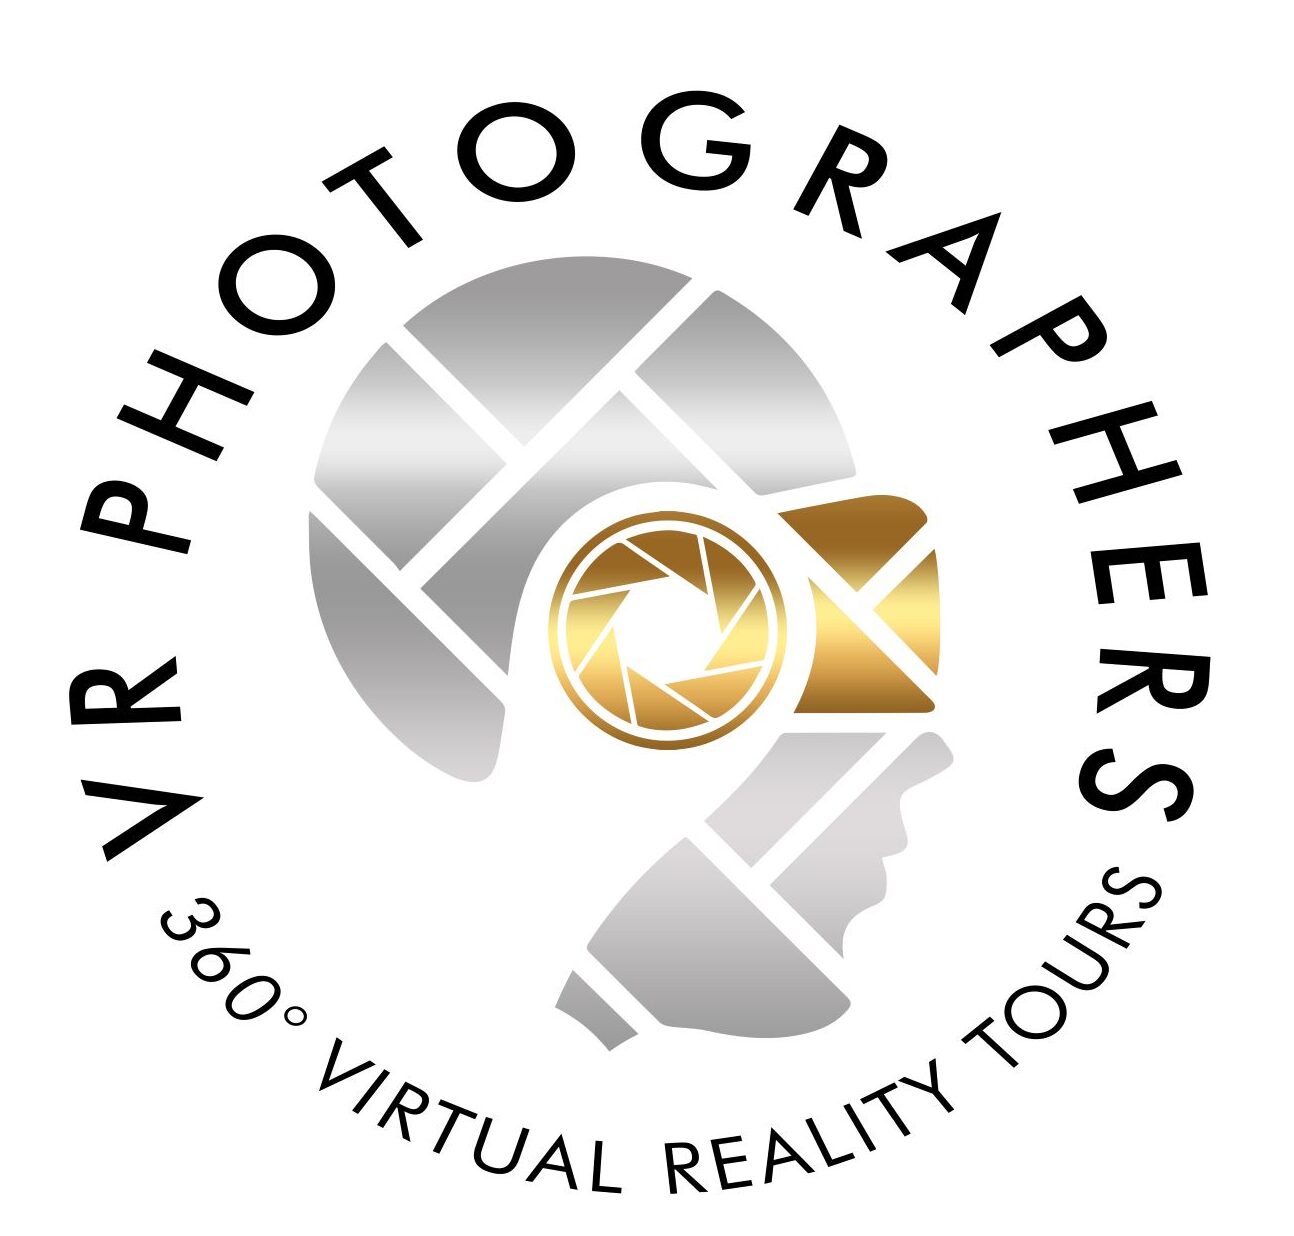 VR photographers